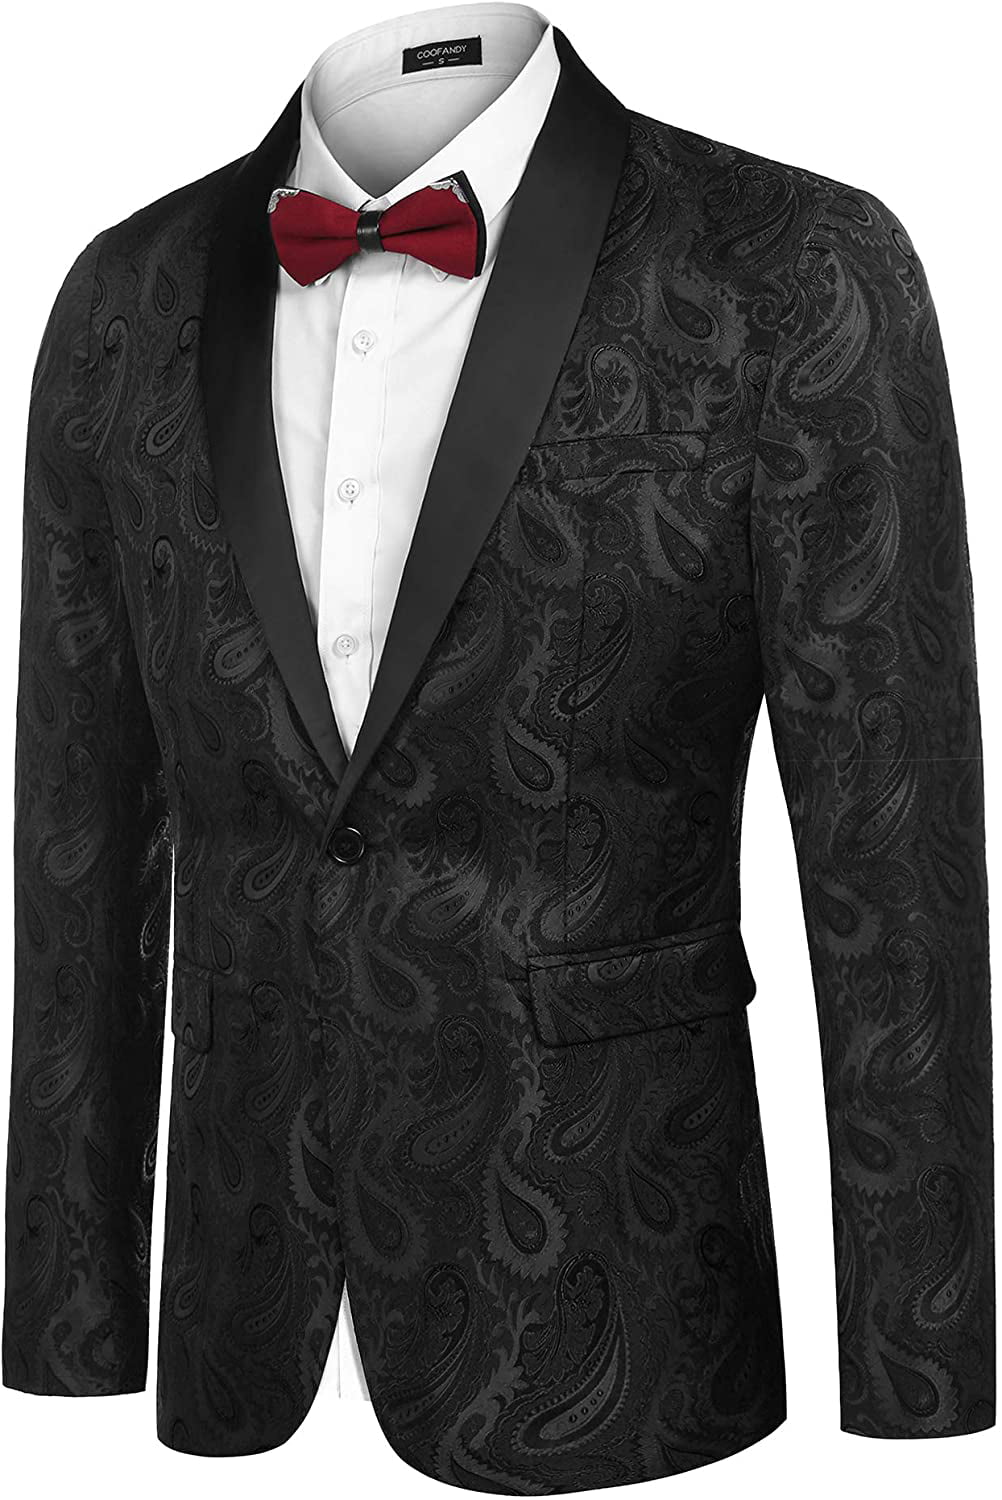 COOFANDY Men's Floral Tuxedo Paisley Suit Jacket Dress Dinner Party Prom Blazer 